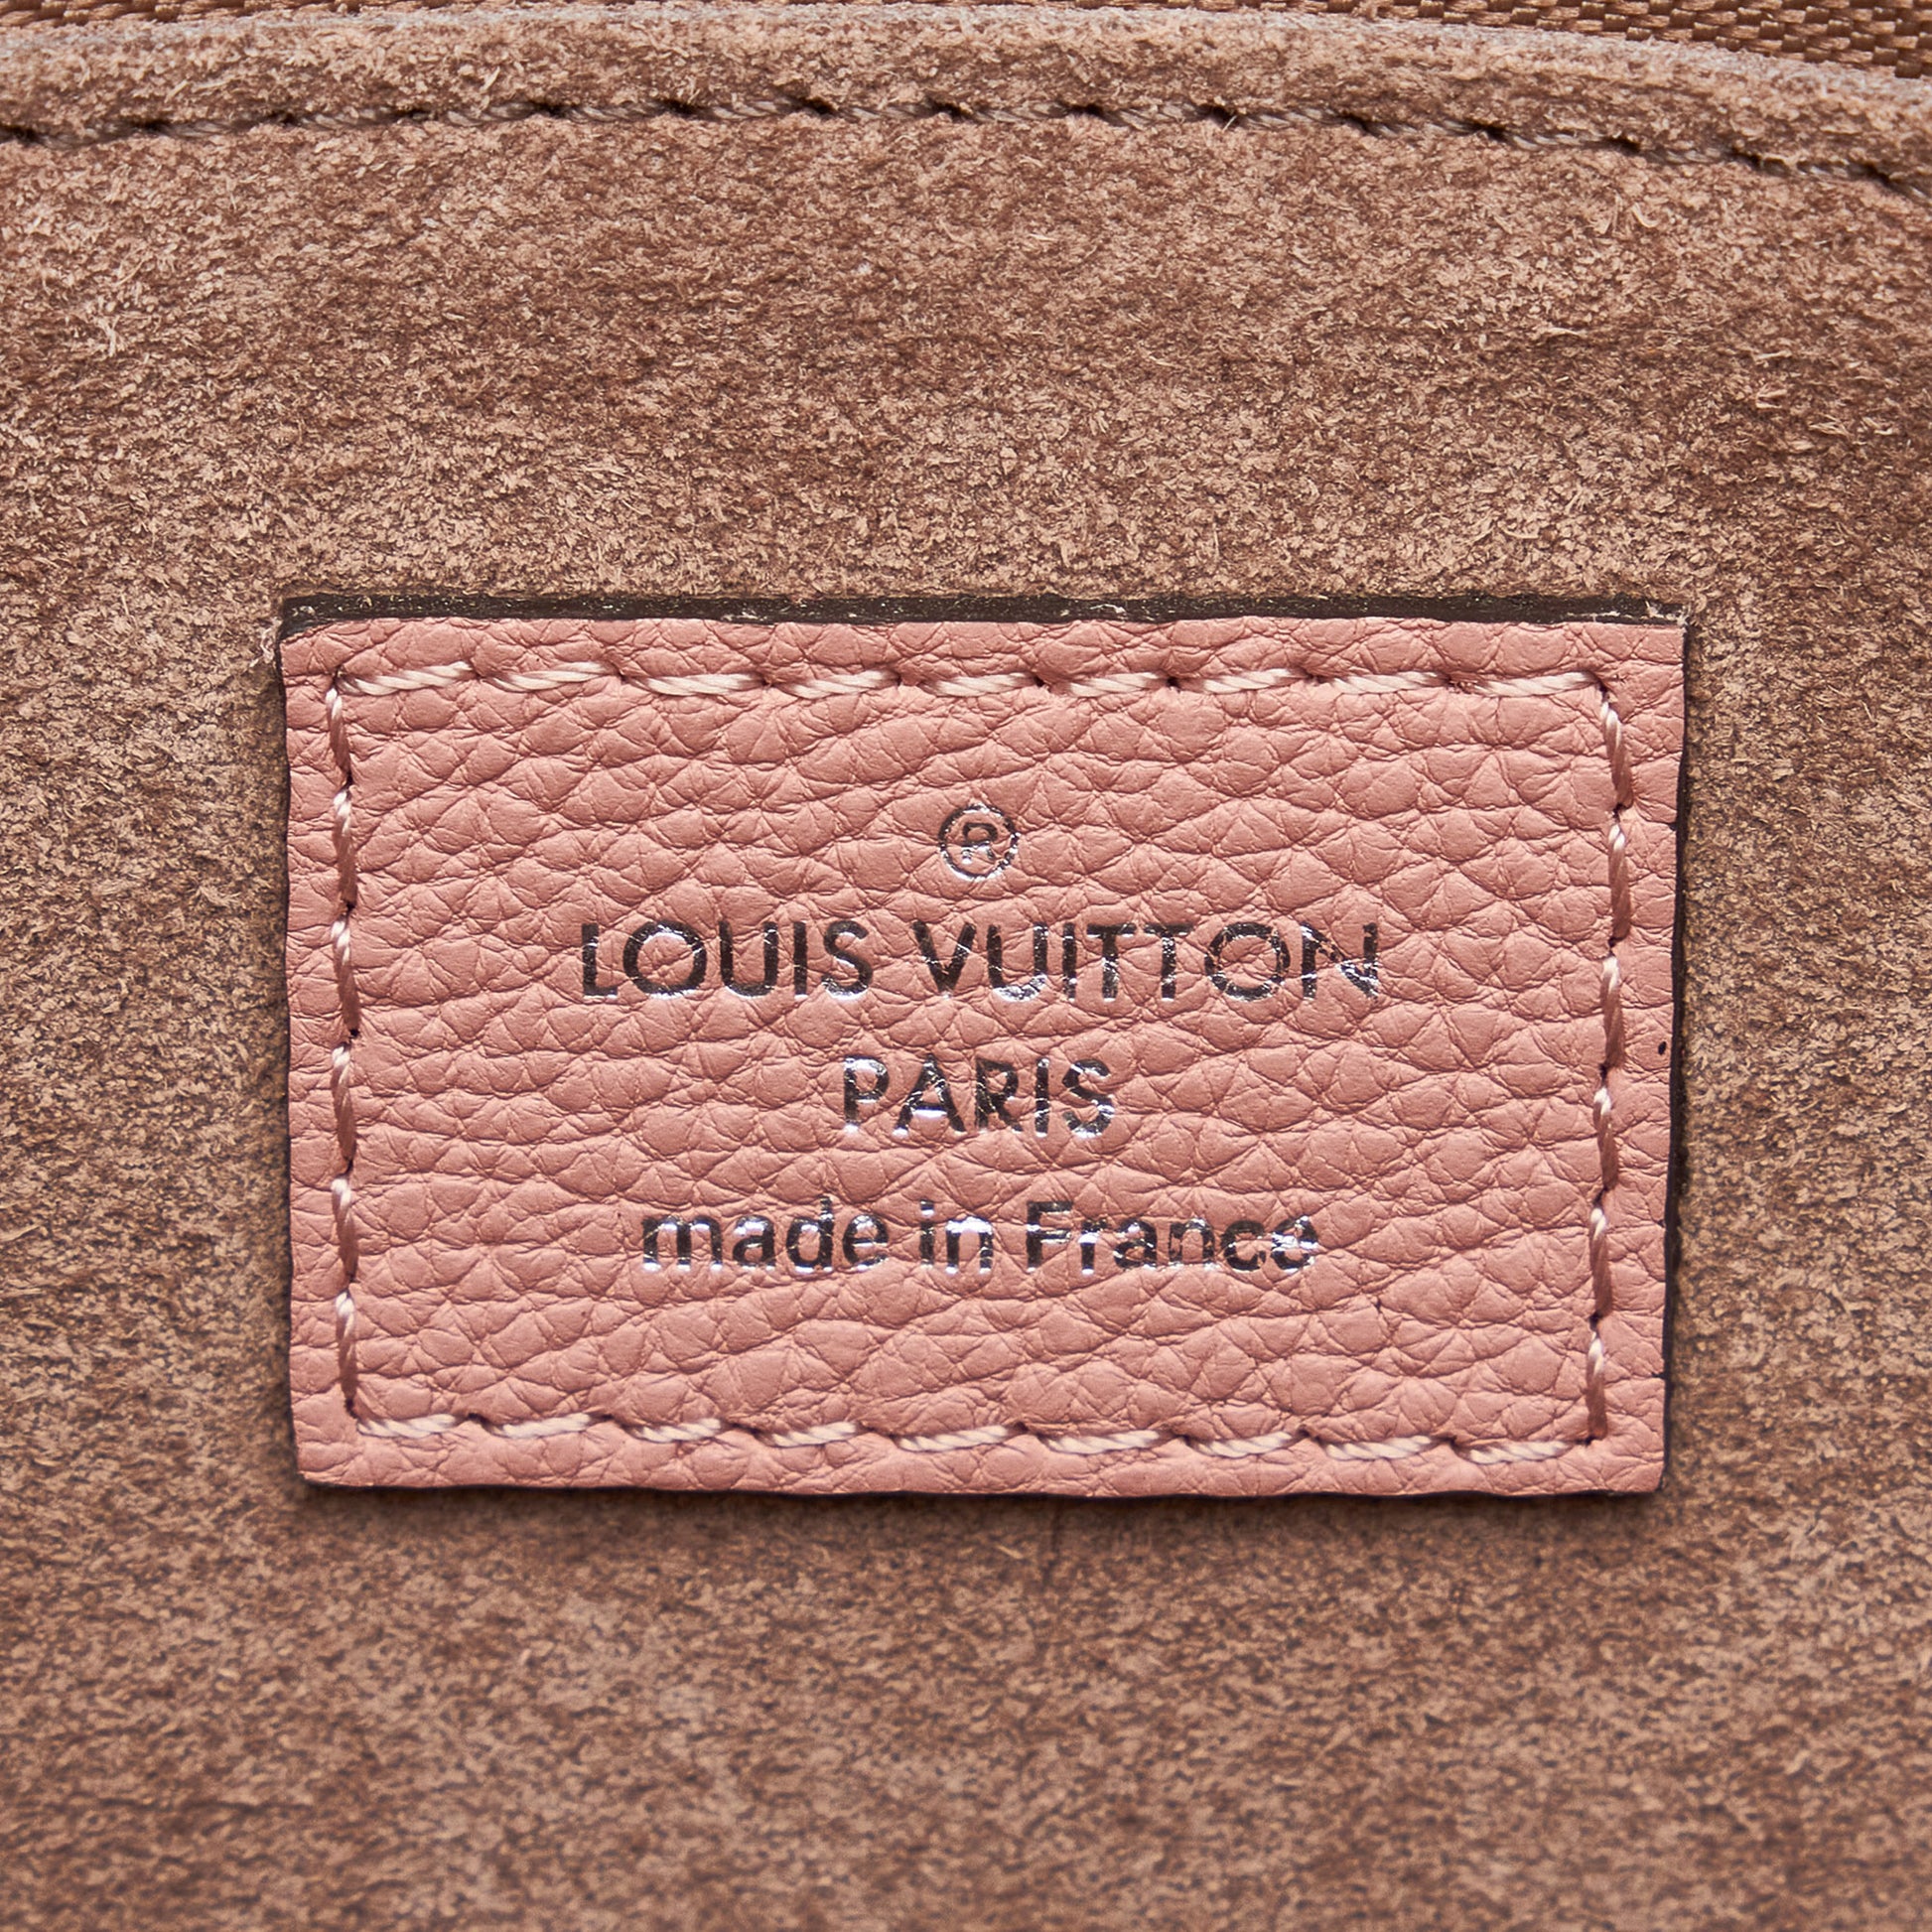 Louis Vuitton Soft Lockit Pm Magnolia